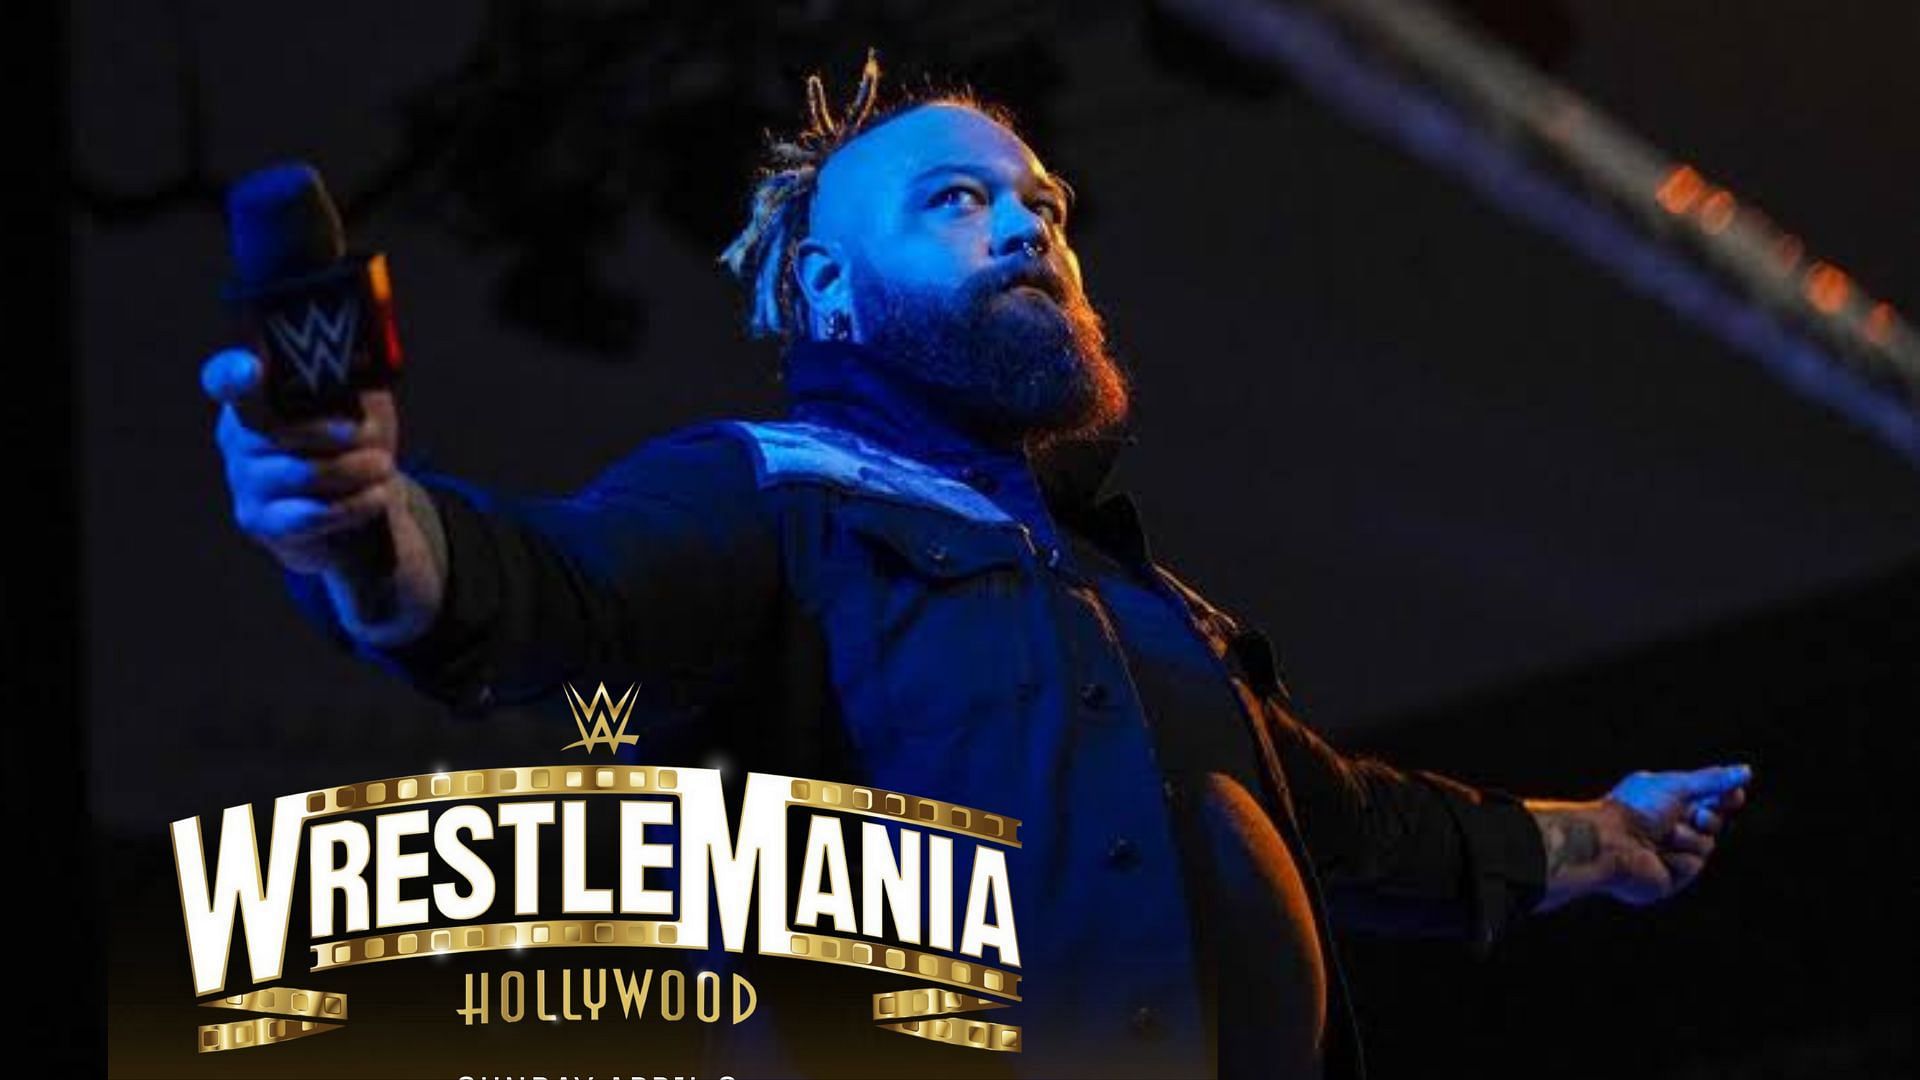 Bray Wyatt vs. Bobby Lashley is rumored for WrestleMania 39